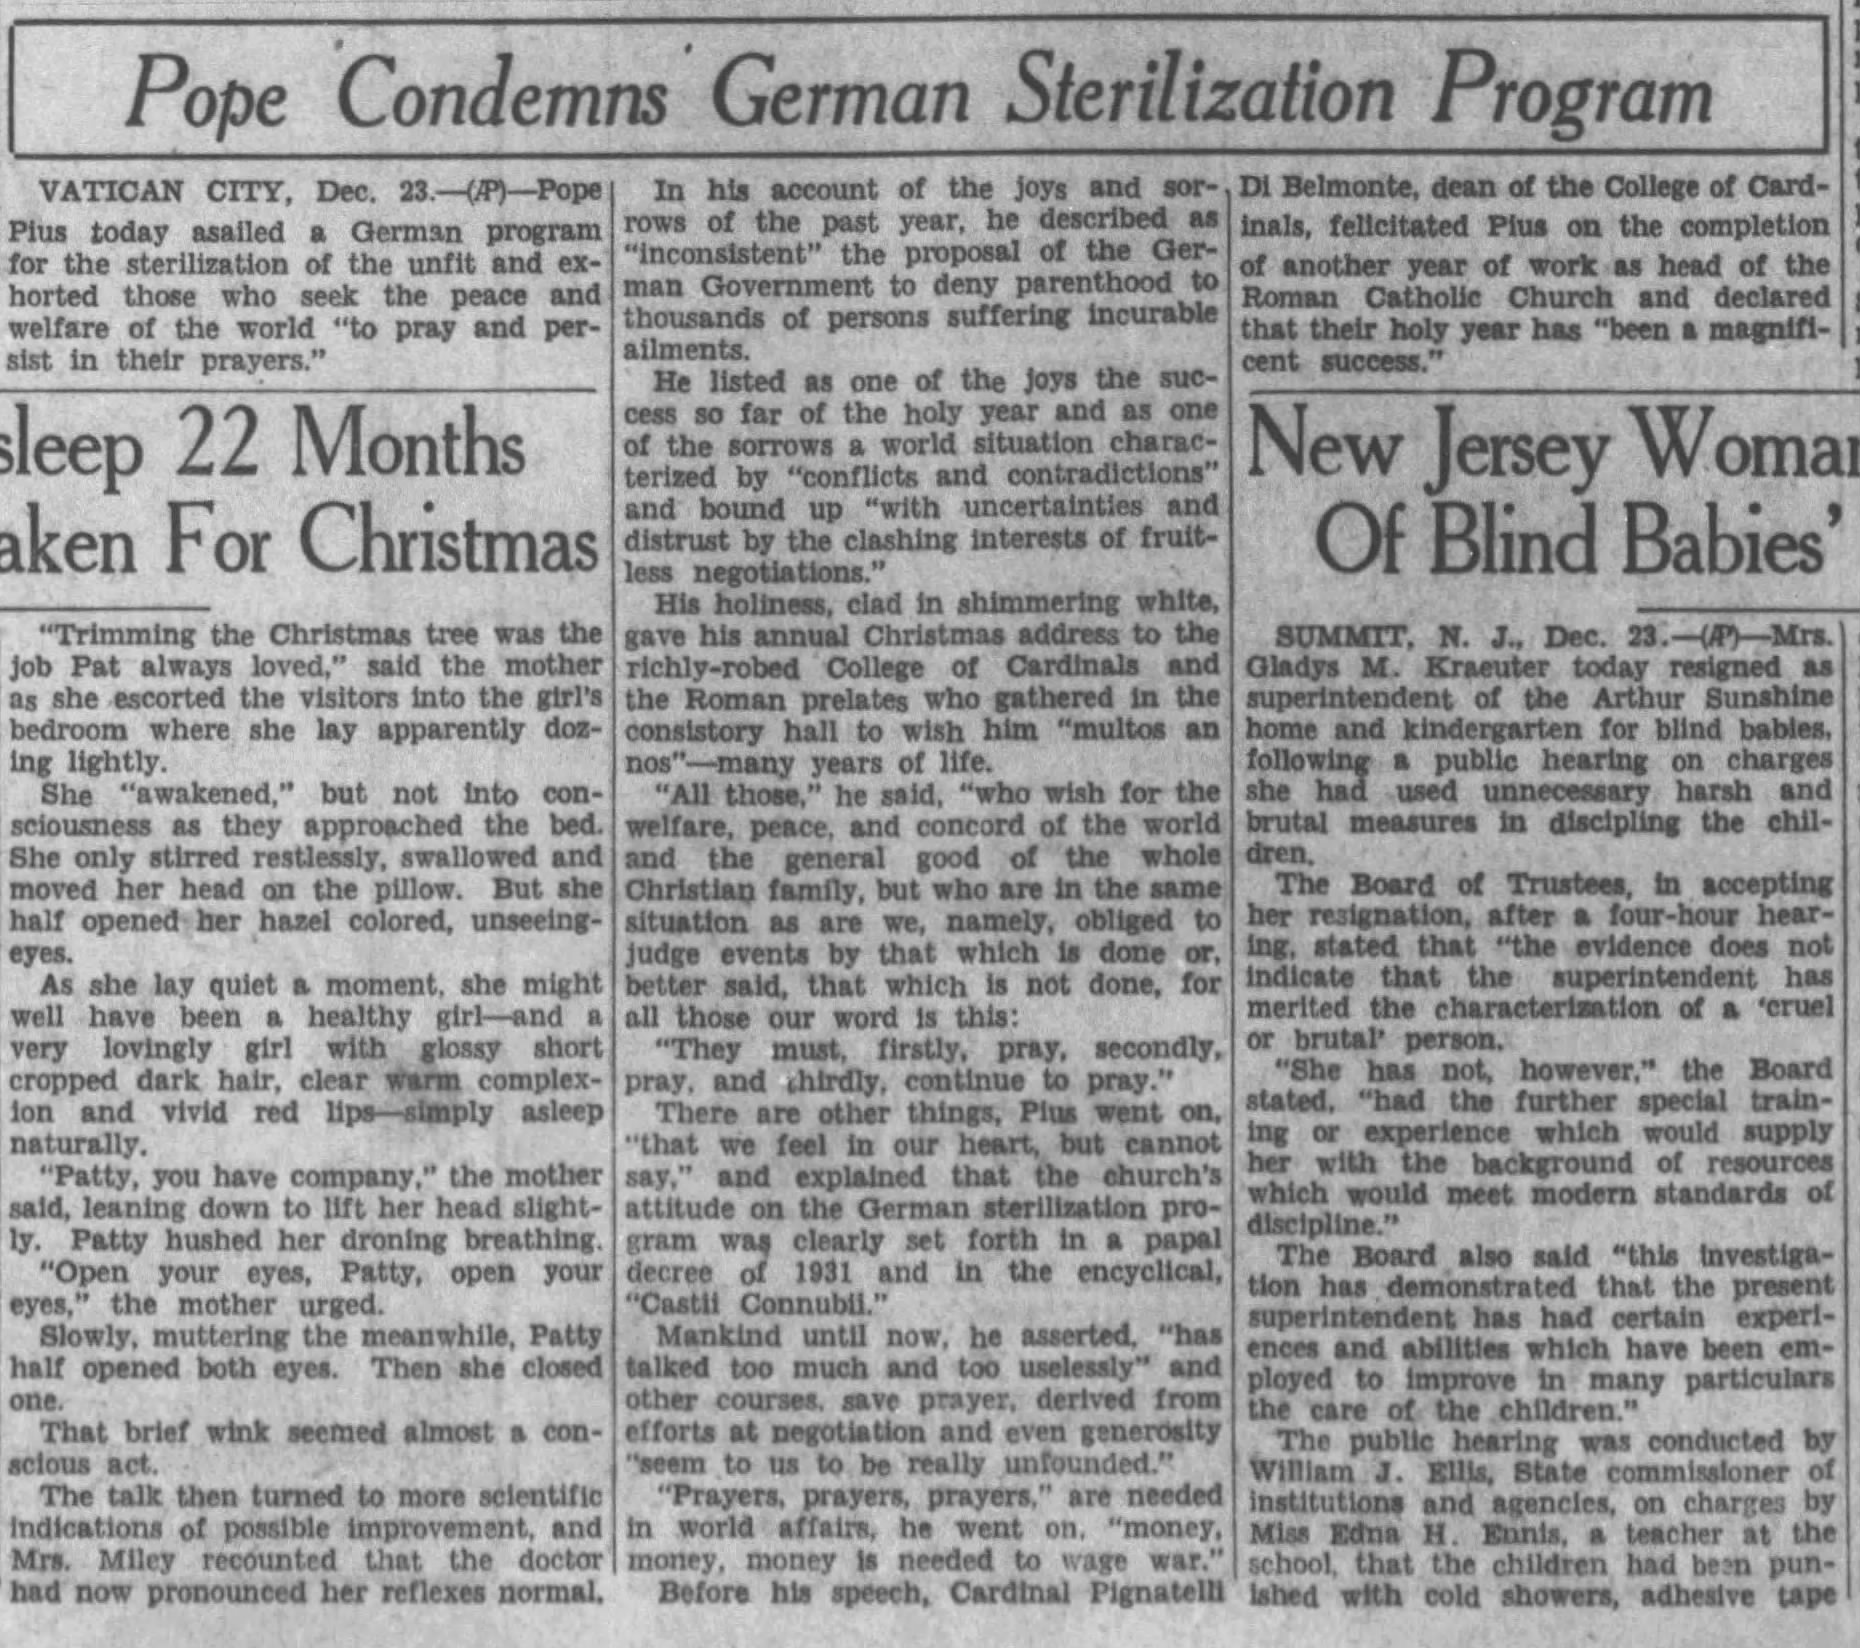 Pope Condemns German Sterilization Program